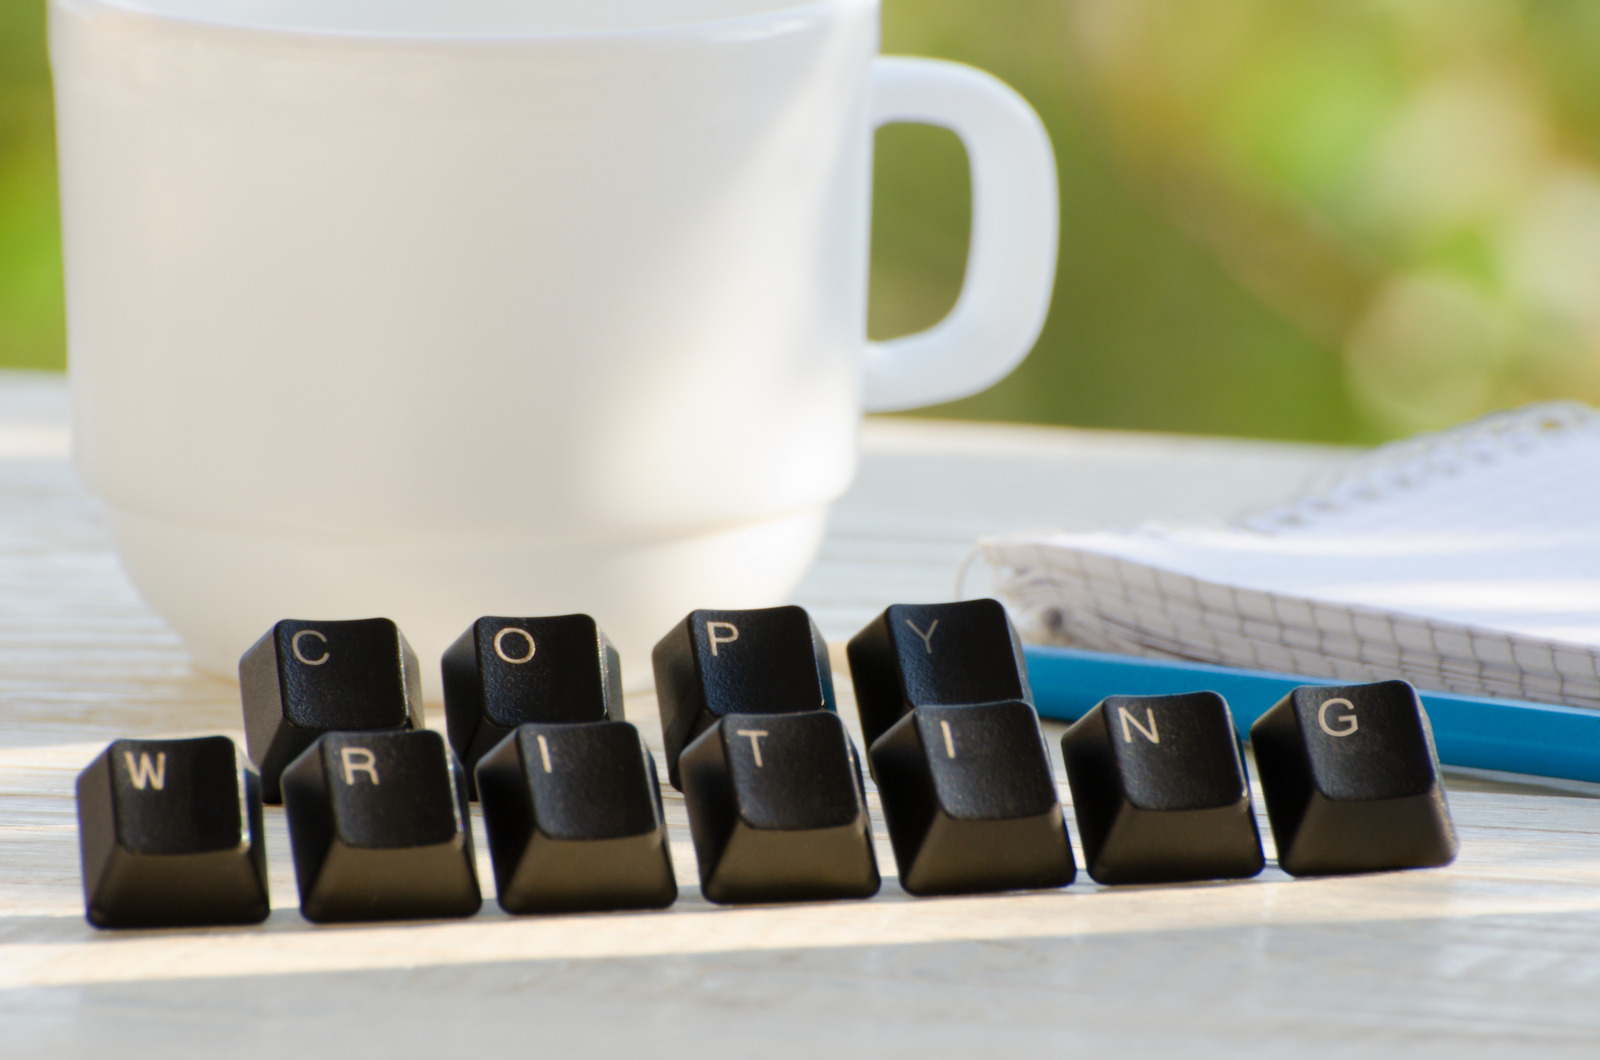 Copywriting Word of keys on a white table, tea mug